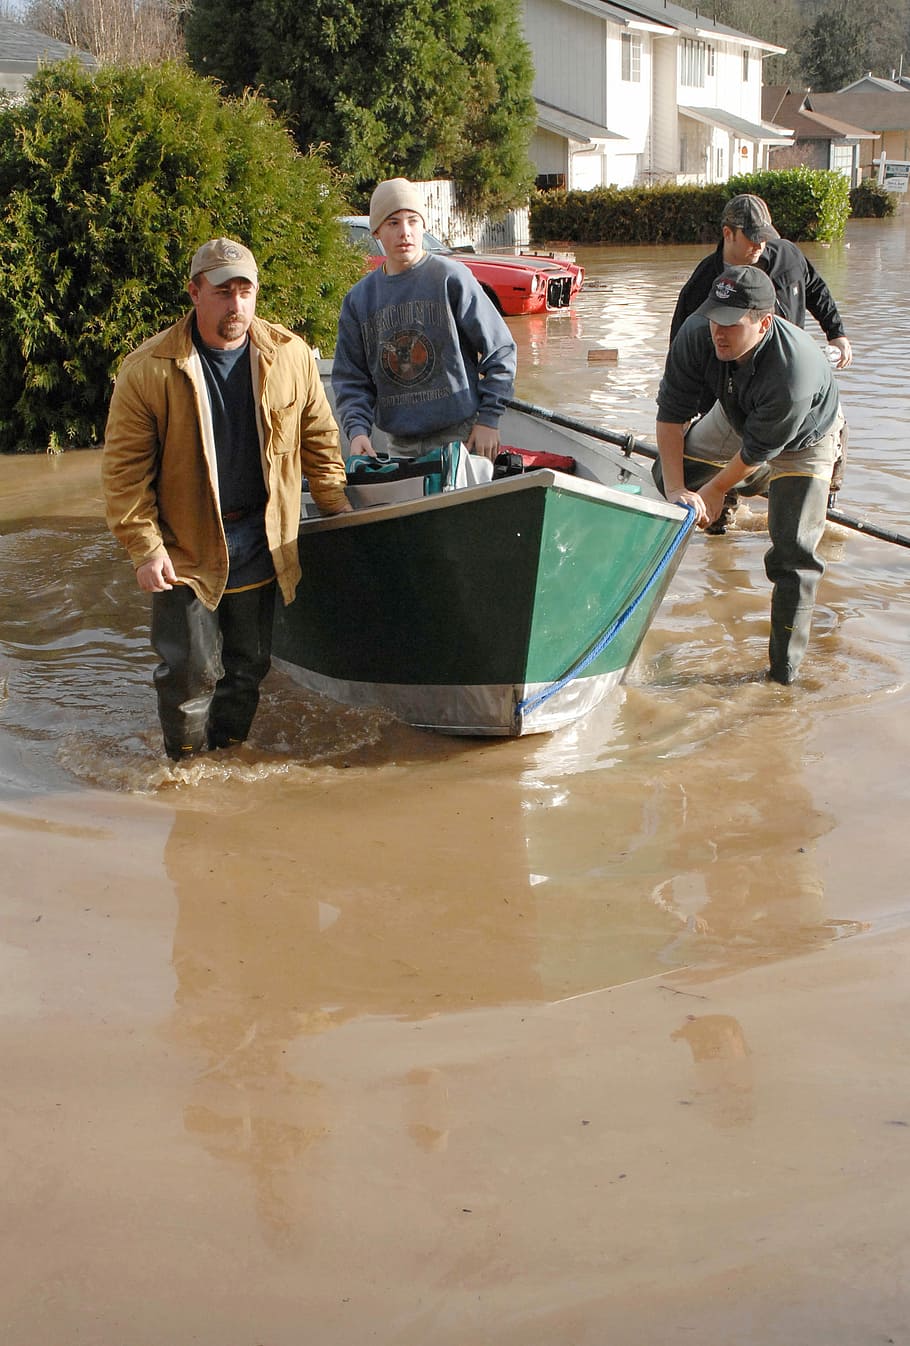 2007, flooding, Vernonia, Oregon, air force, canoe, photos, Natural disaster, people, public domain